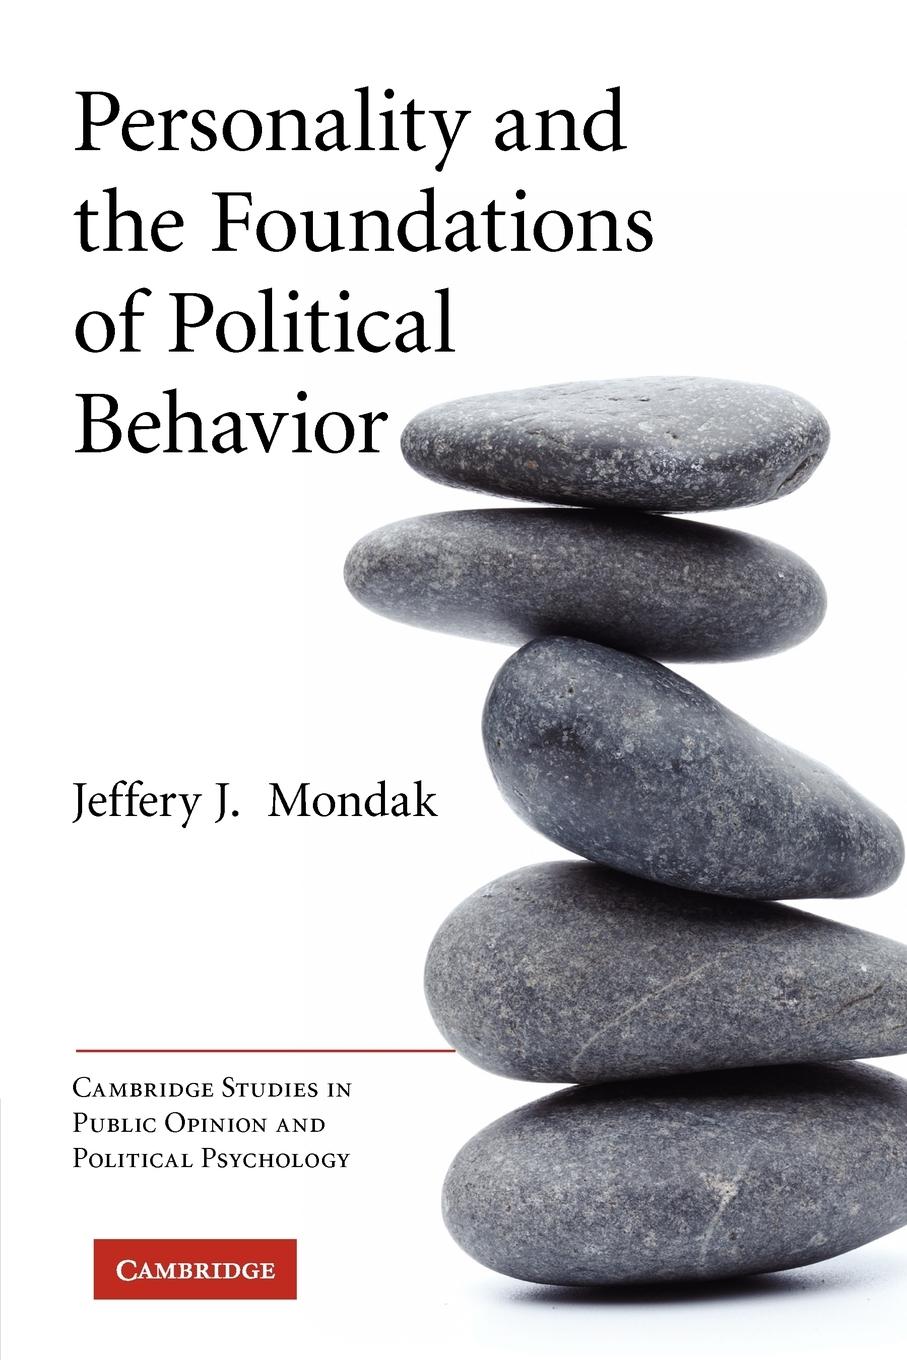 Personality and the Foundations of Political Behavior / Jeffery J. Mondak / Taschenbuch / Paperback / Englisch / 2010 / Cambridge University Press / EAN 9780521140959 - Mondak, Jeffery J.